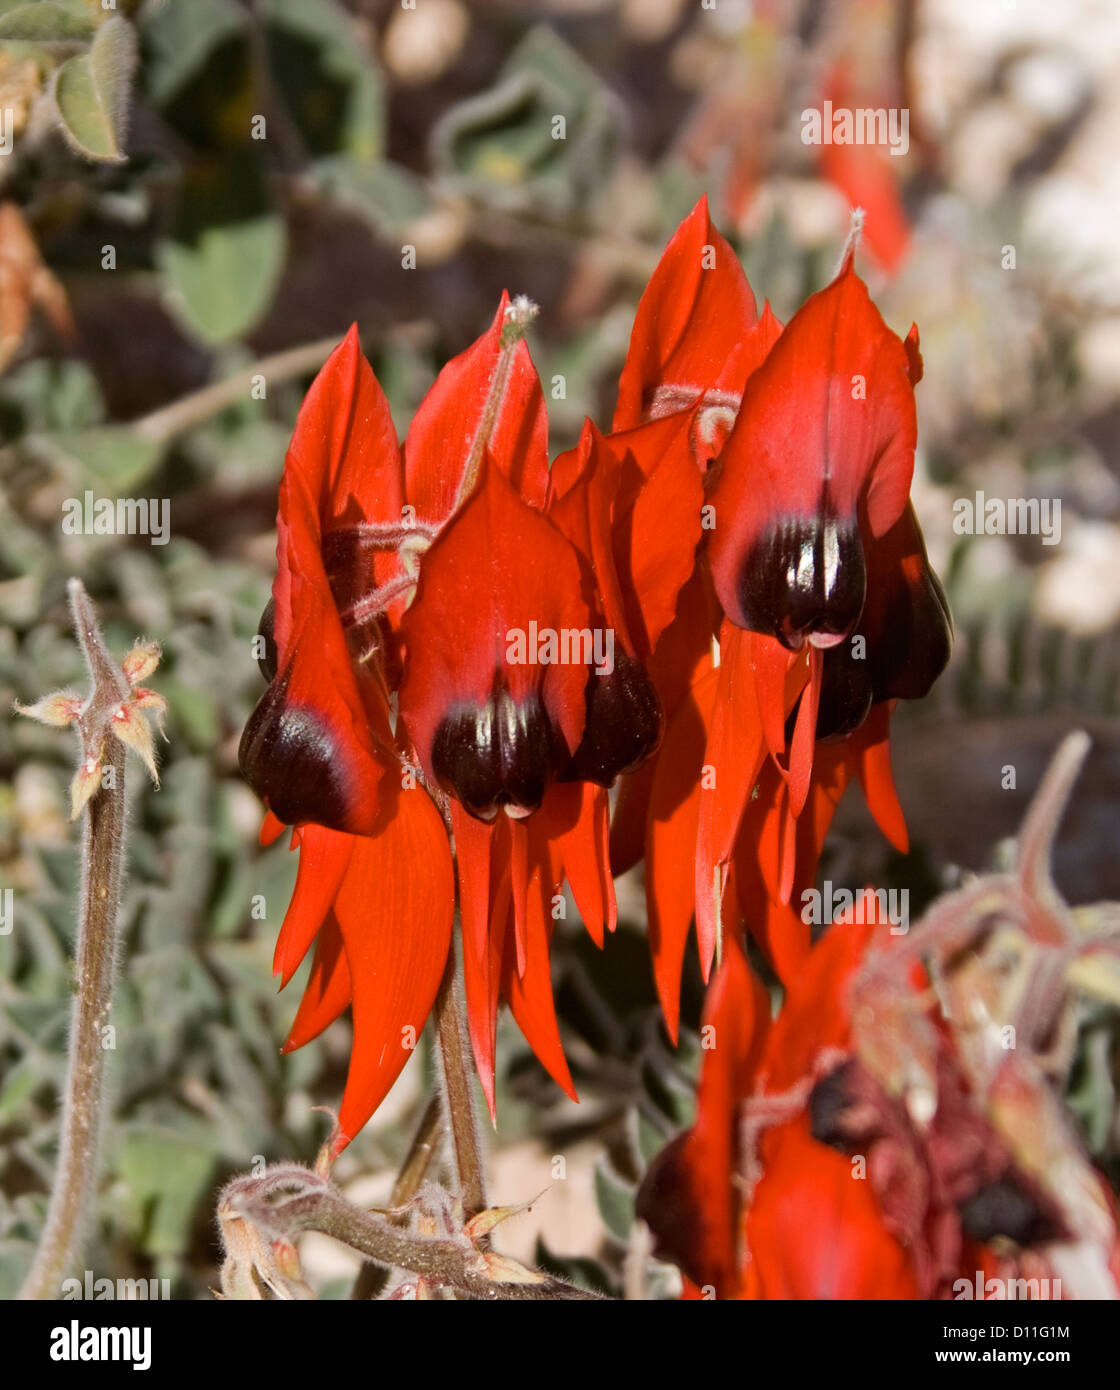 Red flowers of Sturt's desert pea - Swainsona / Swainsonia formosa - at Tibooburra NSW outback Australia Stock Photo